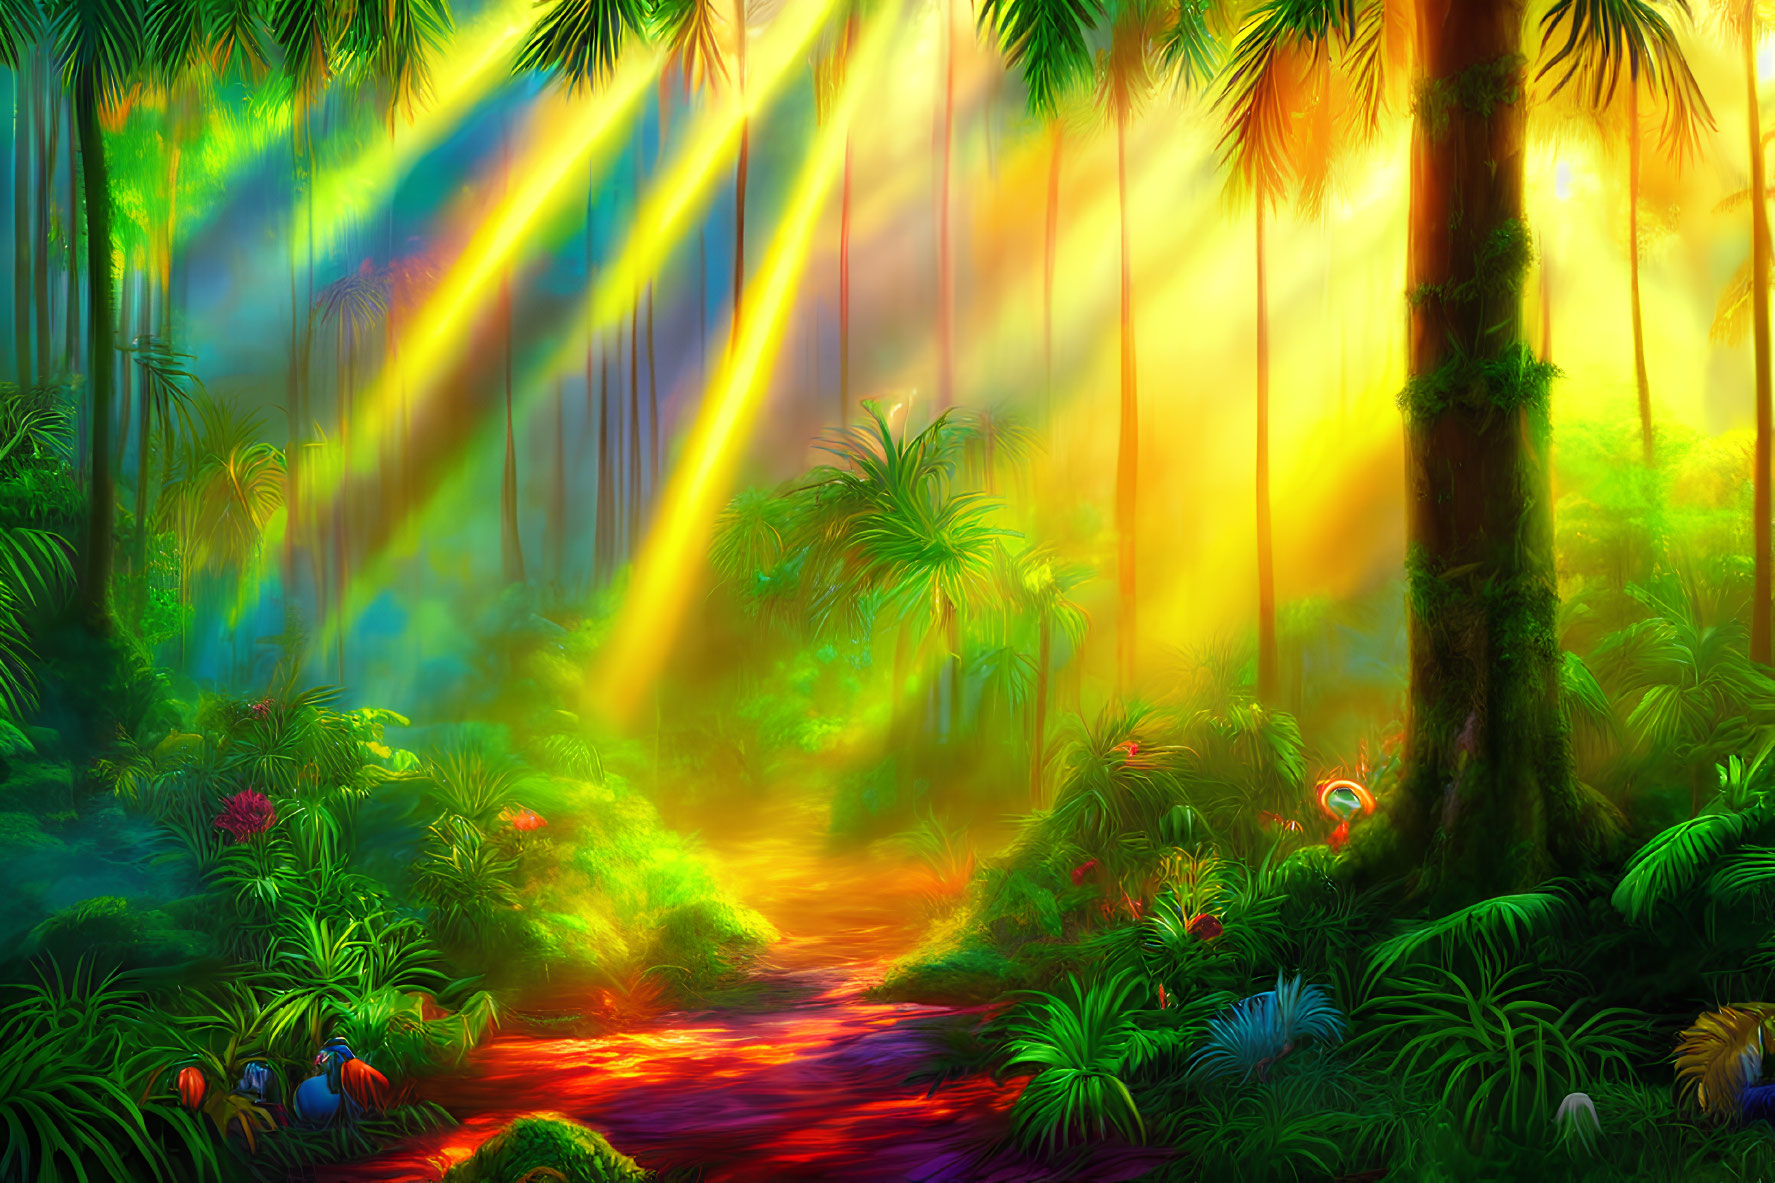 Lush Jungle Scene with Sunlight Peeking Through Foliage